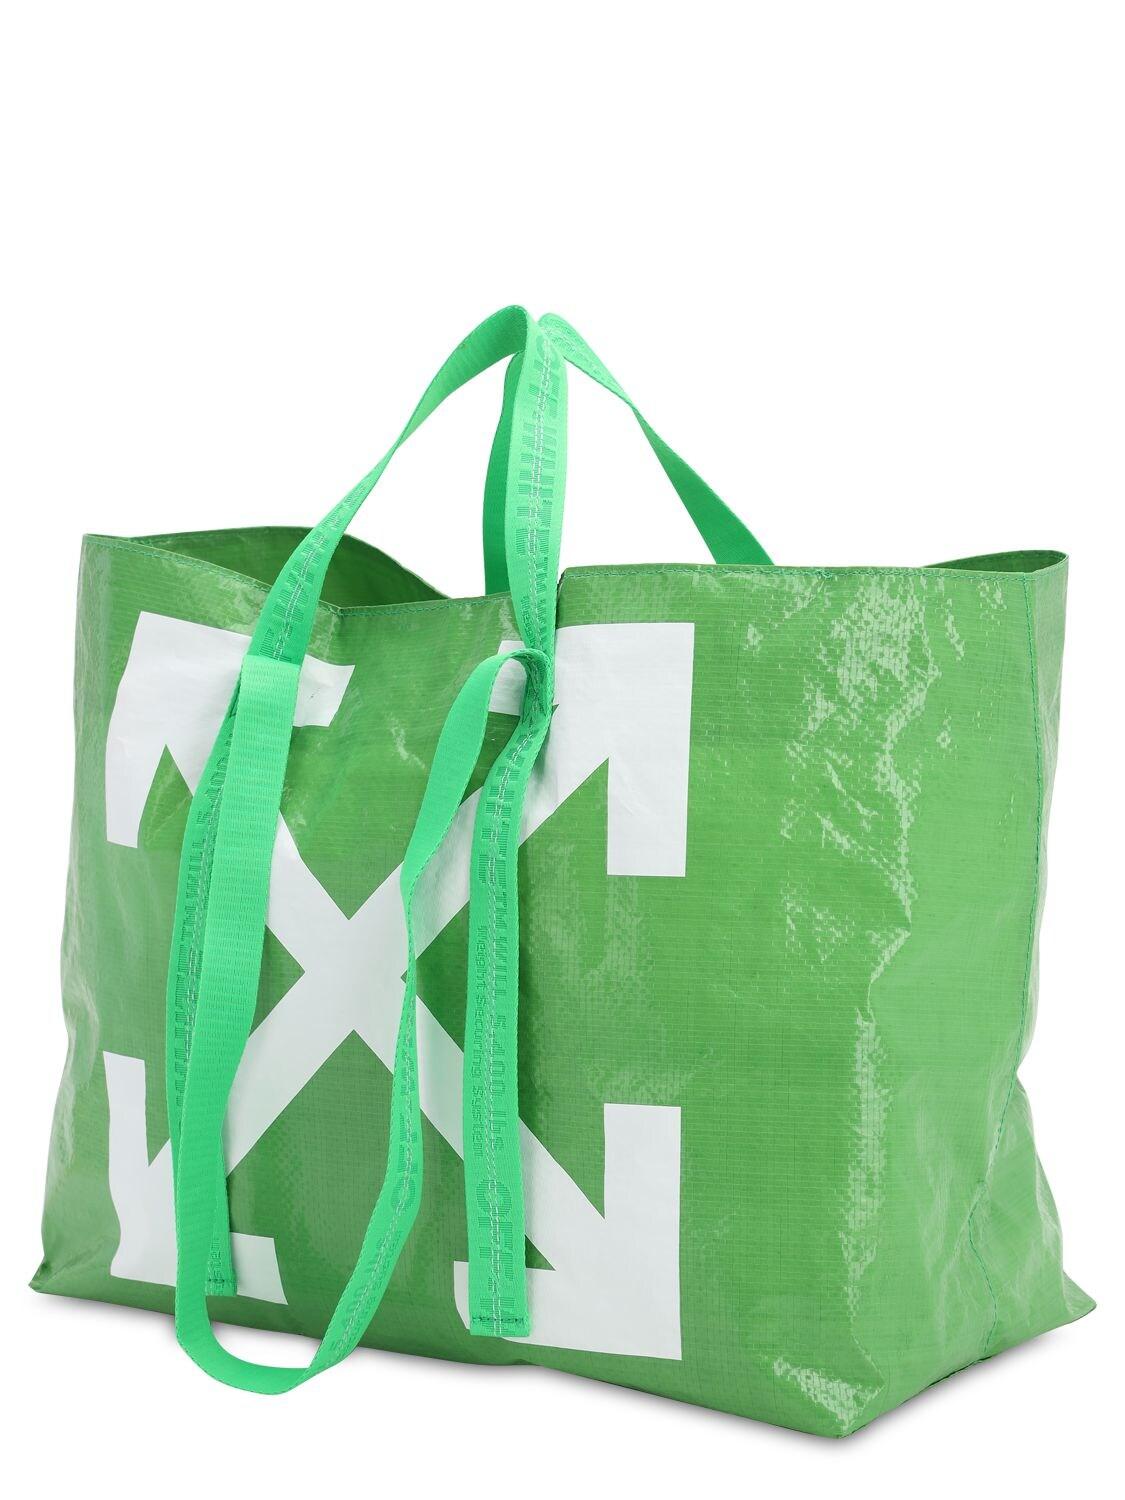 Off-White c/o Virgil Abloh Logo Printed Pvc Tote Bag in Green - Lyst